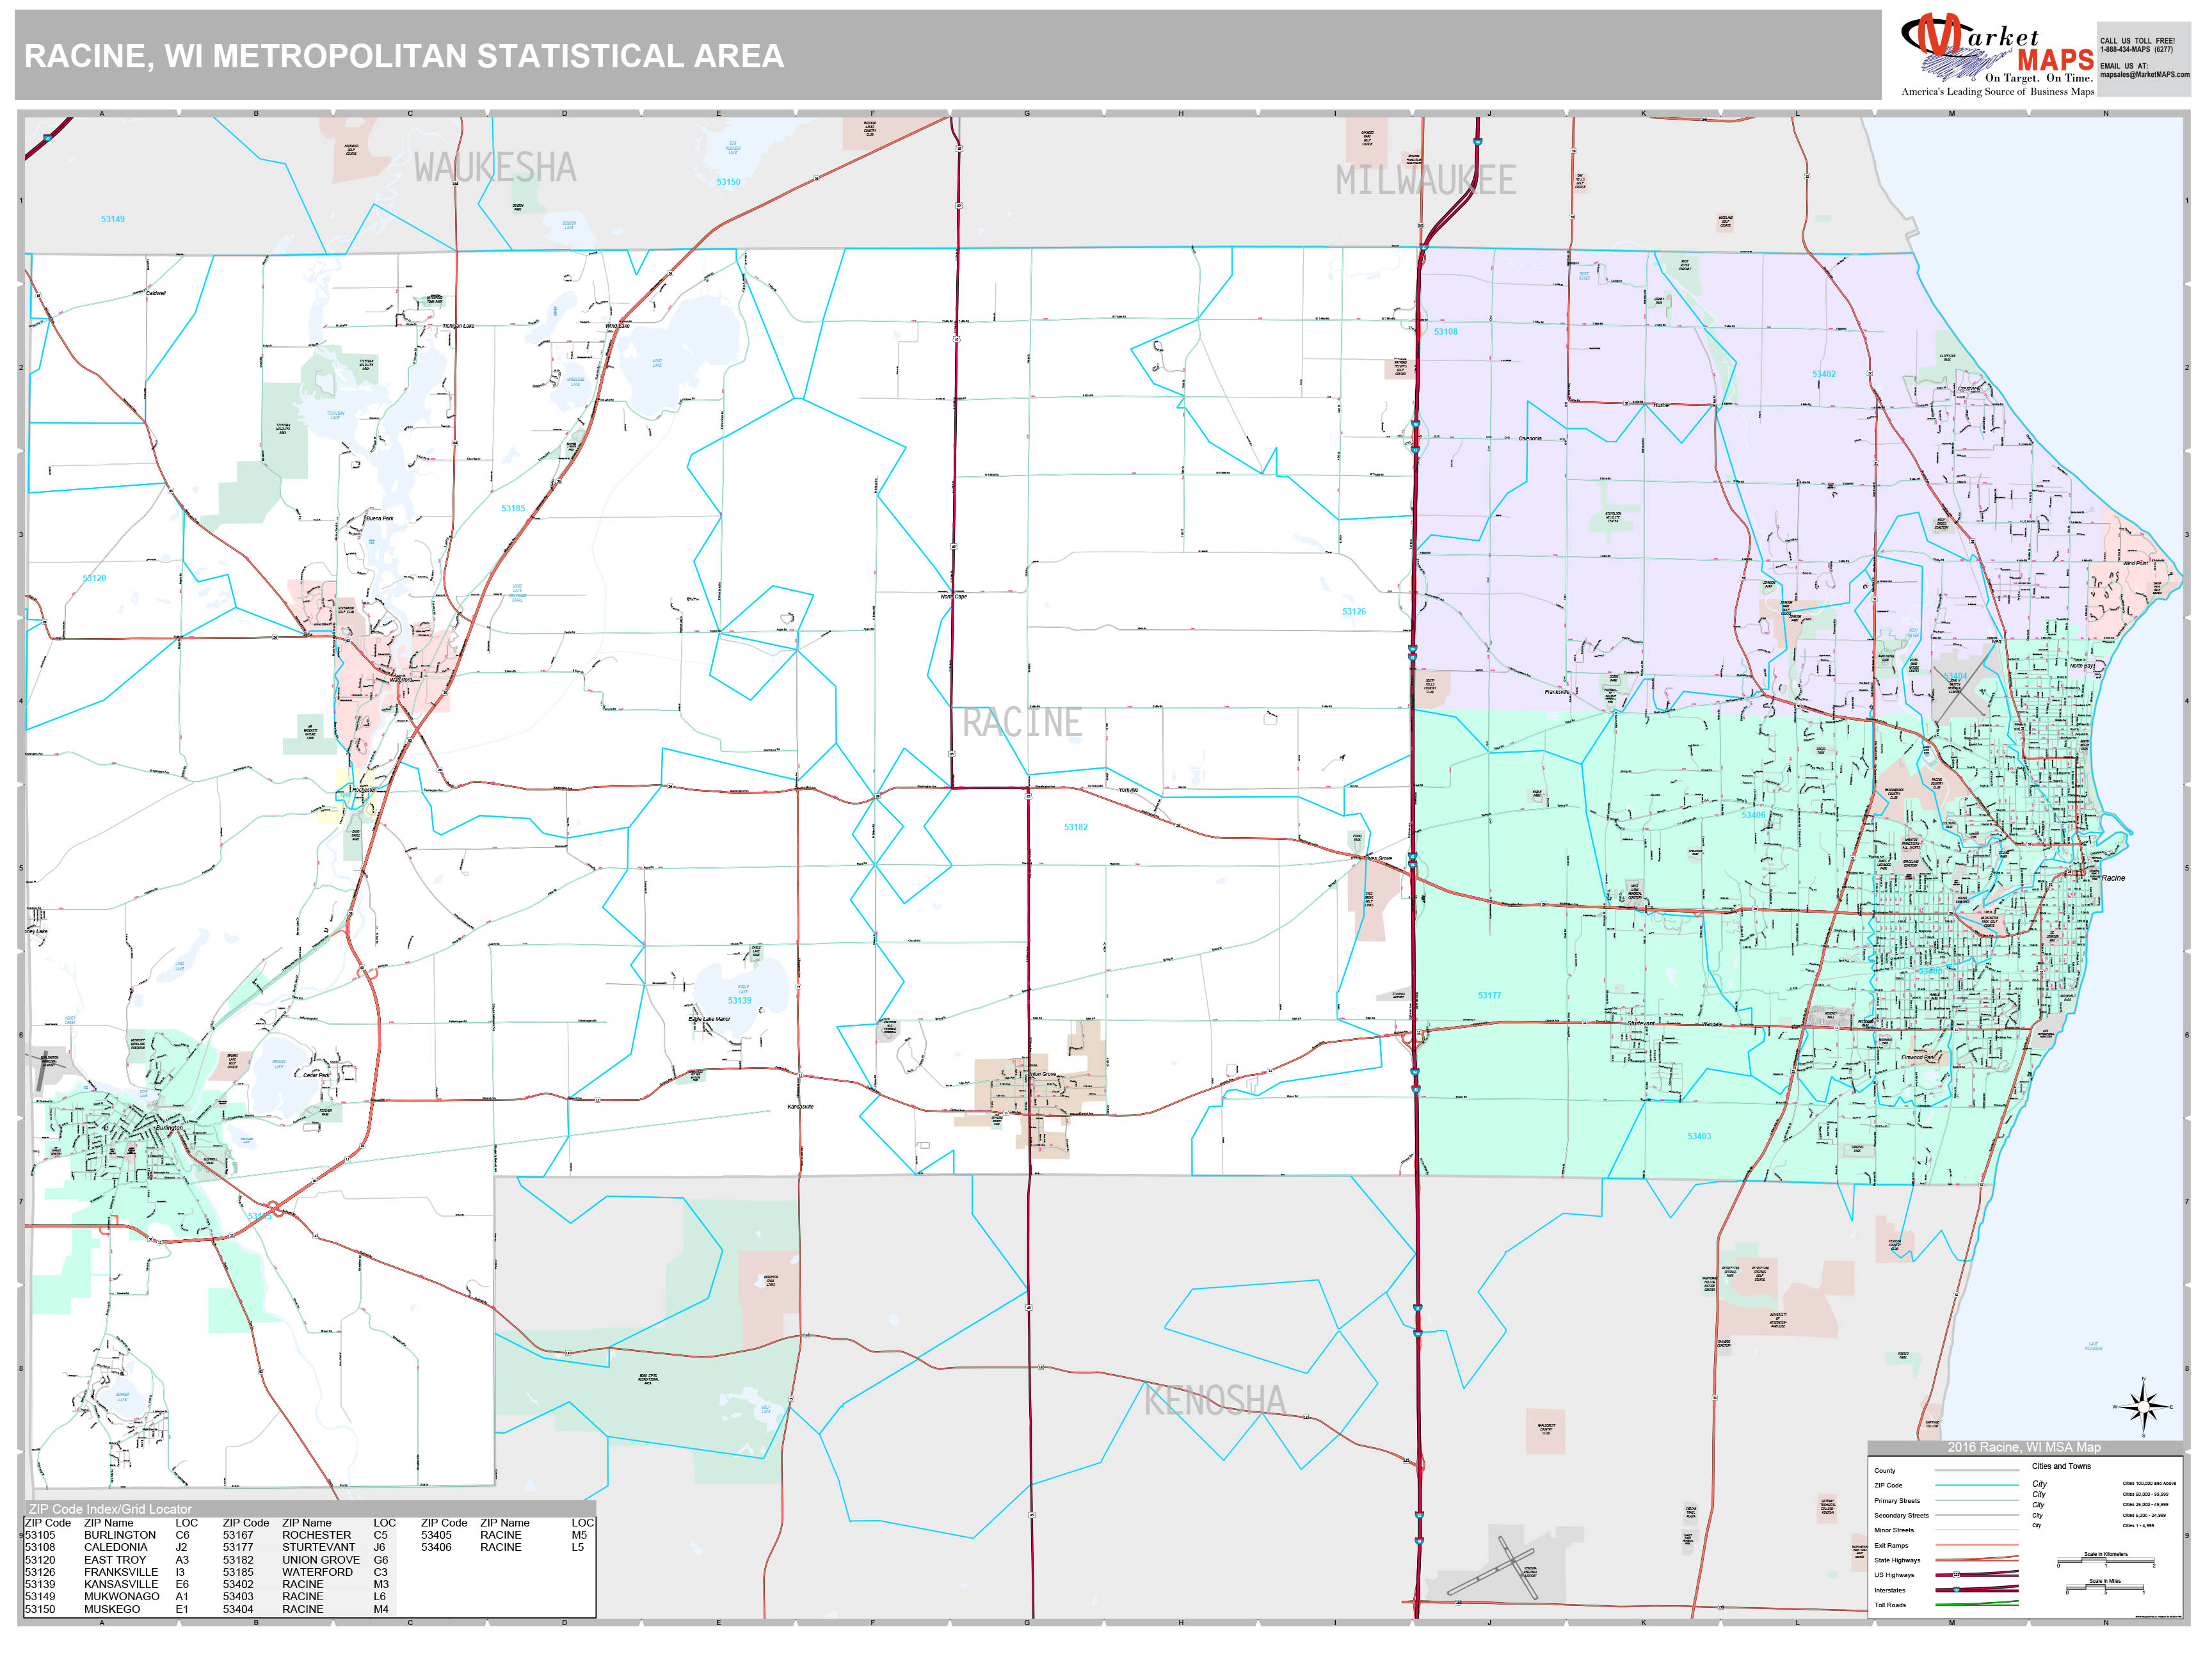 Racine, WI Metro Area Wall Map Premium Style by MarketMAPS - MapSales